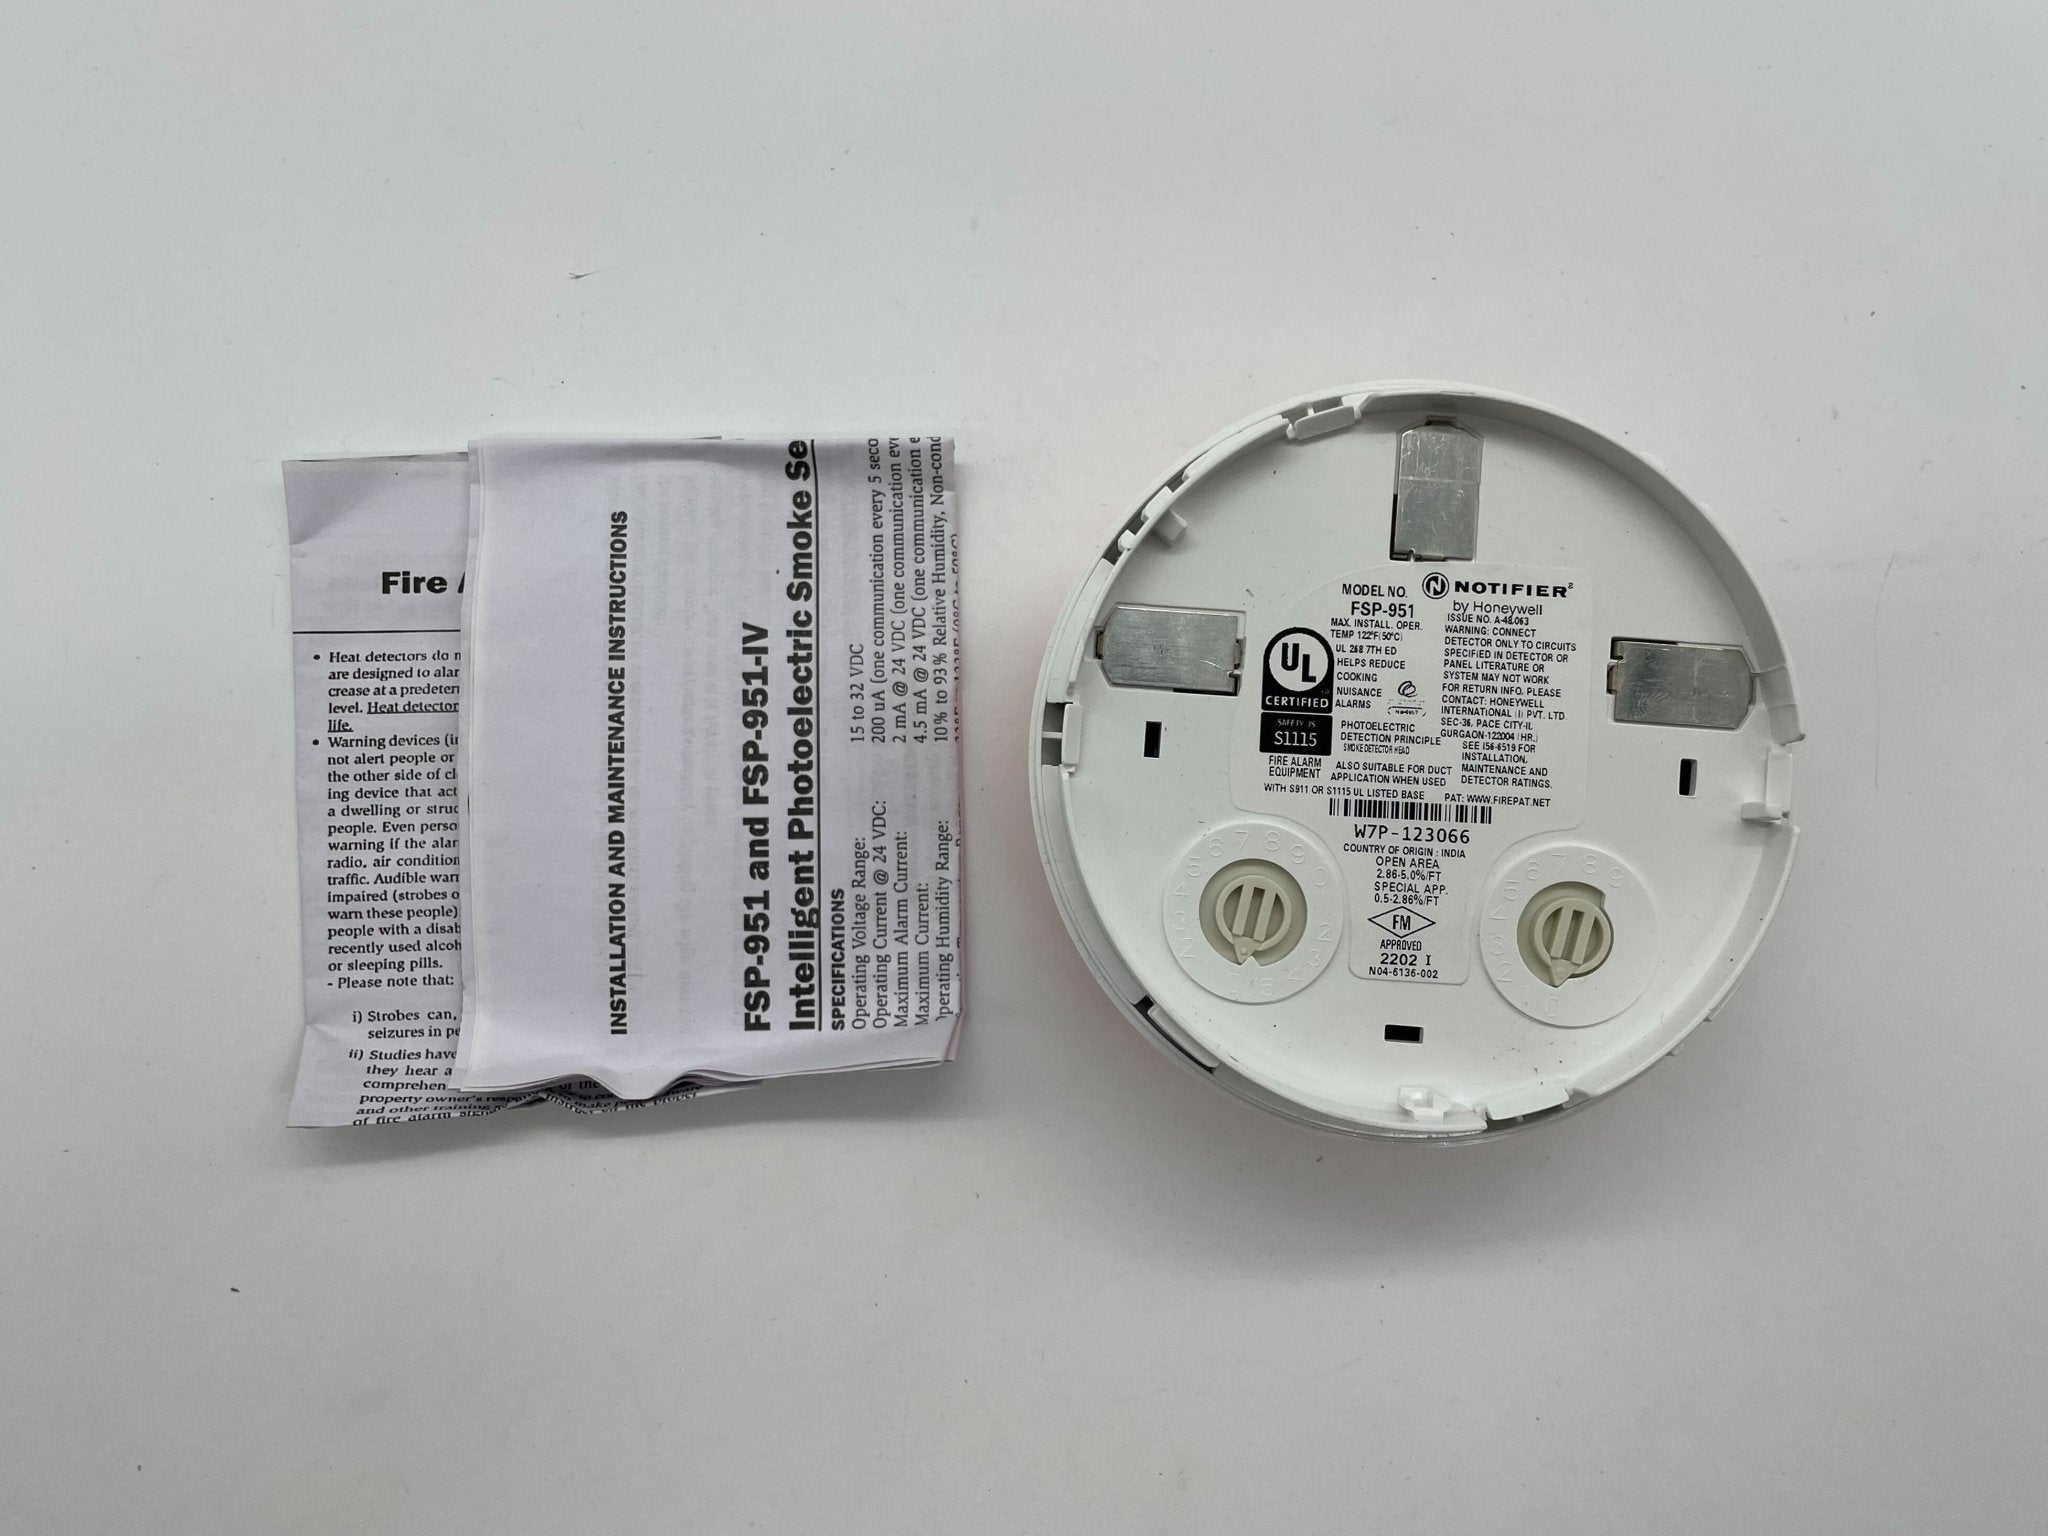 Notifier FSP-951 - The Fire Alarm Supplier